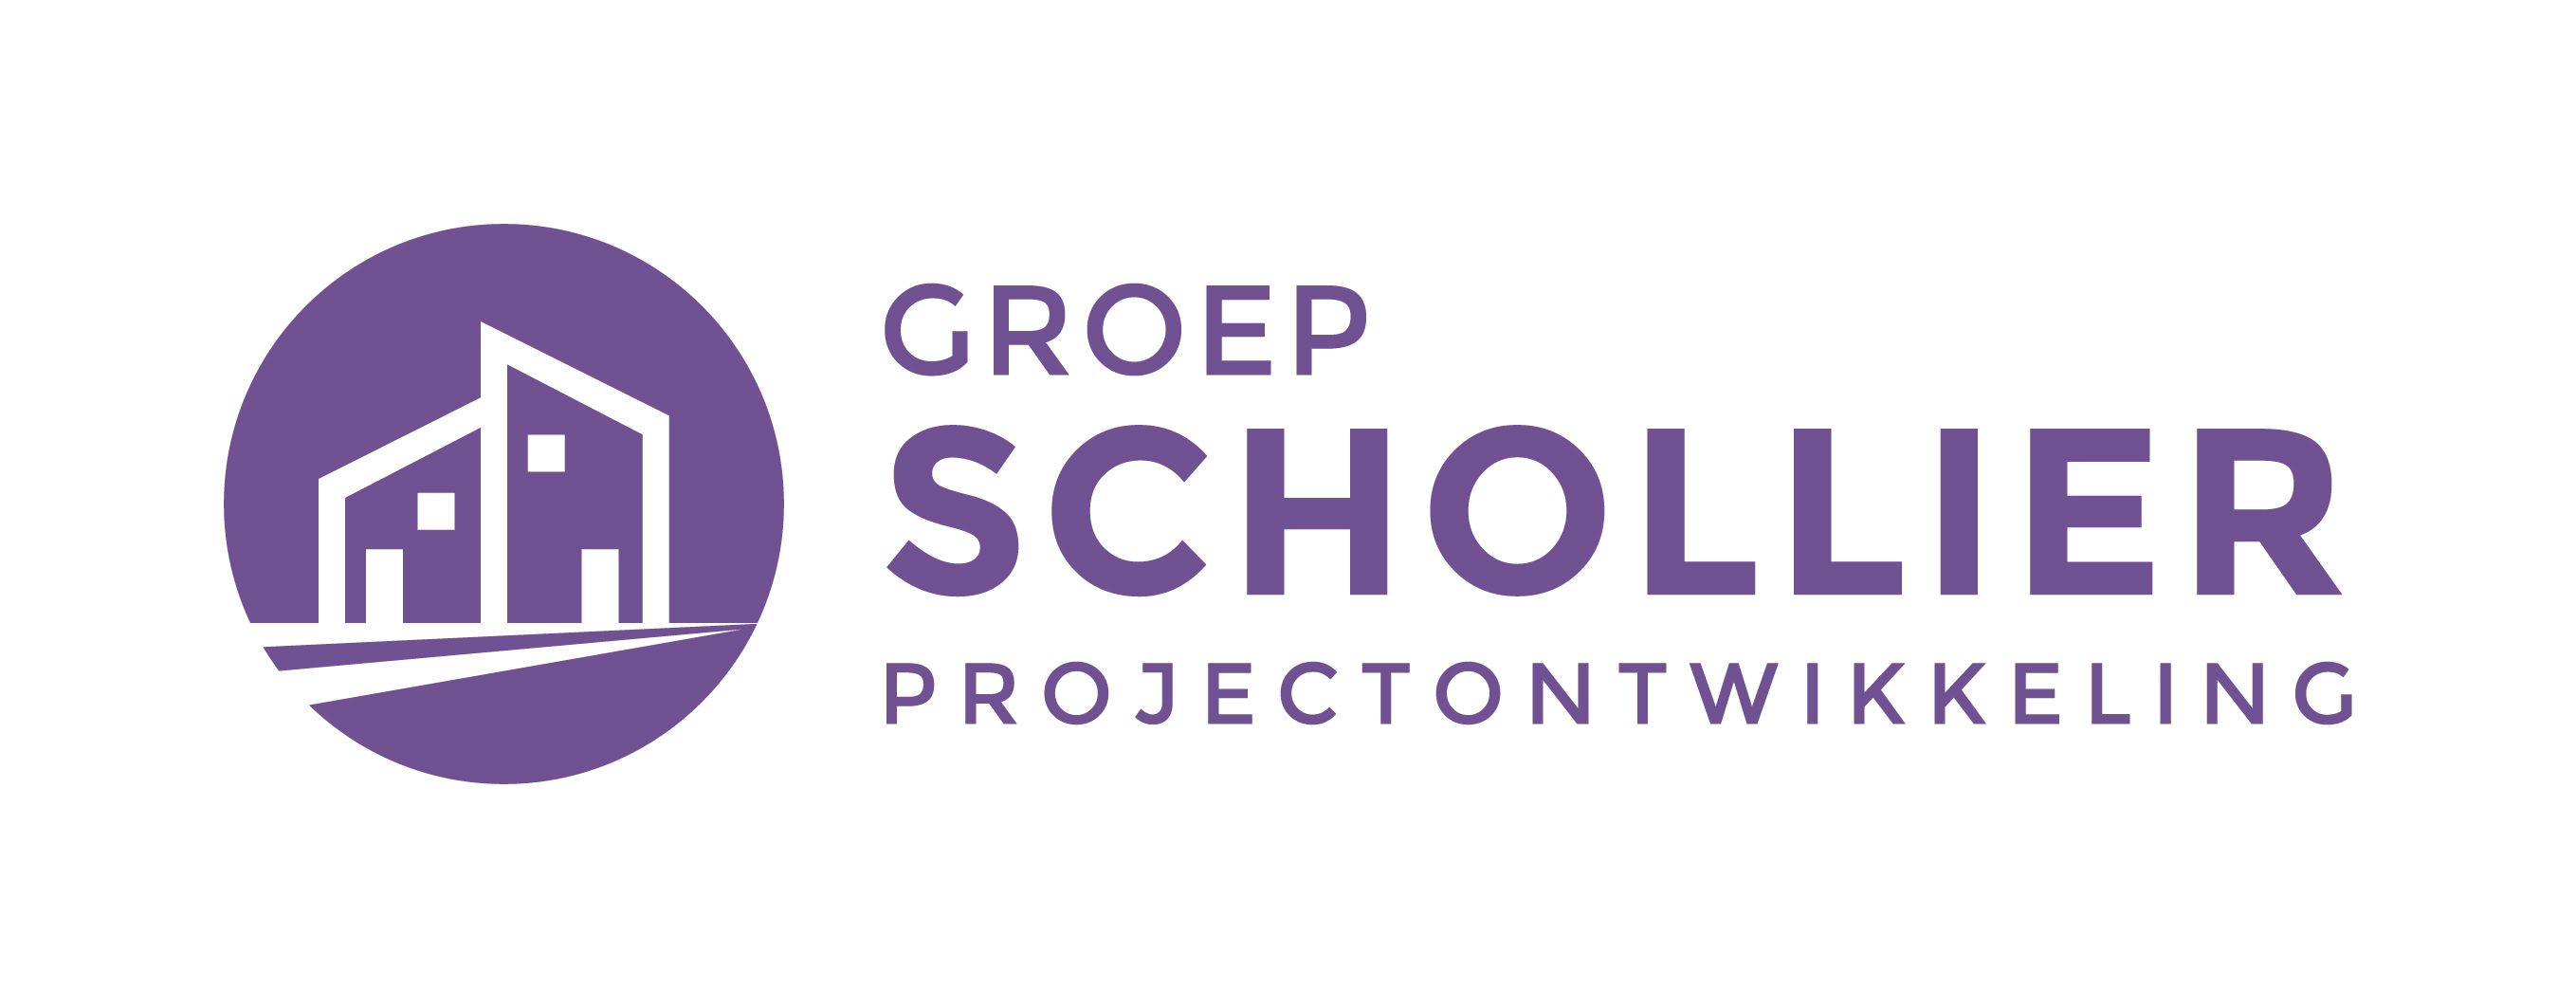 GroepSchollier_Logo_Pos_PMS